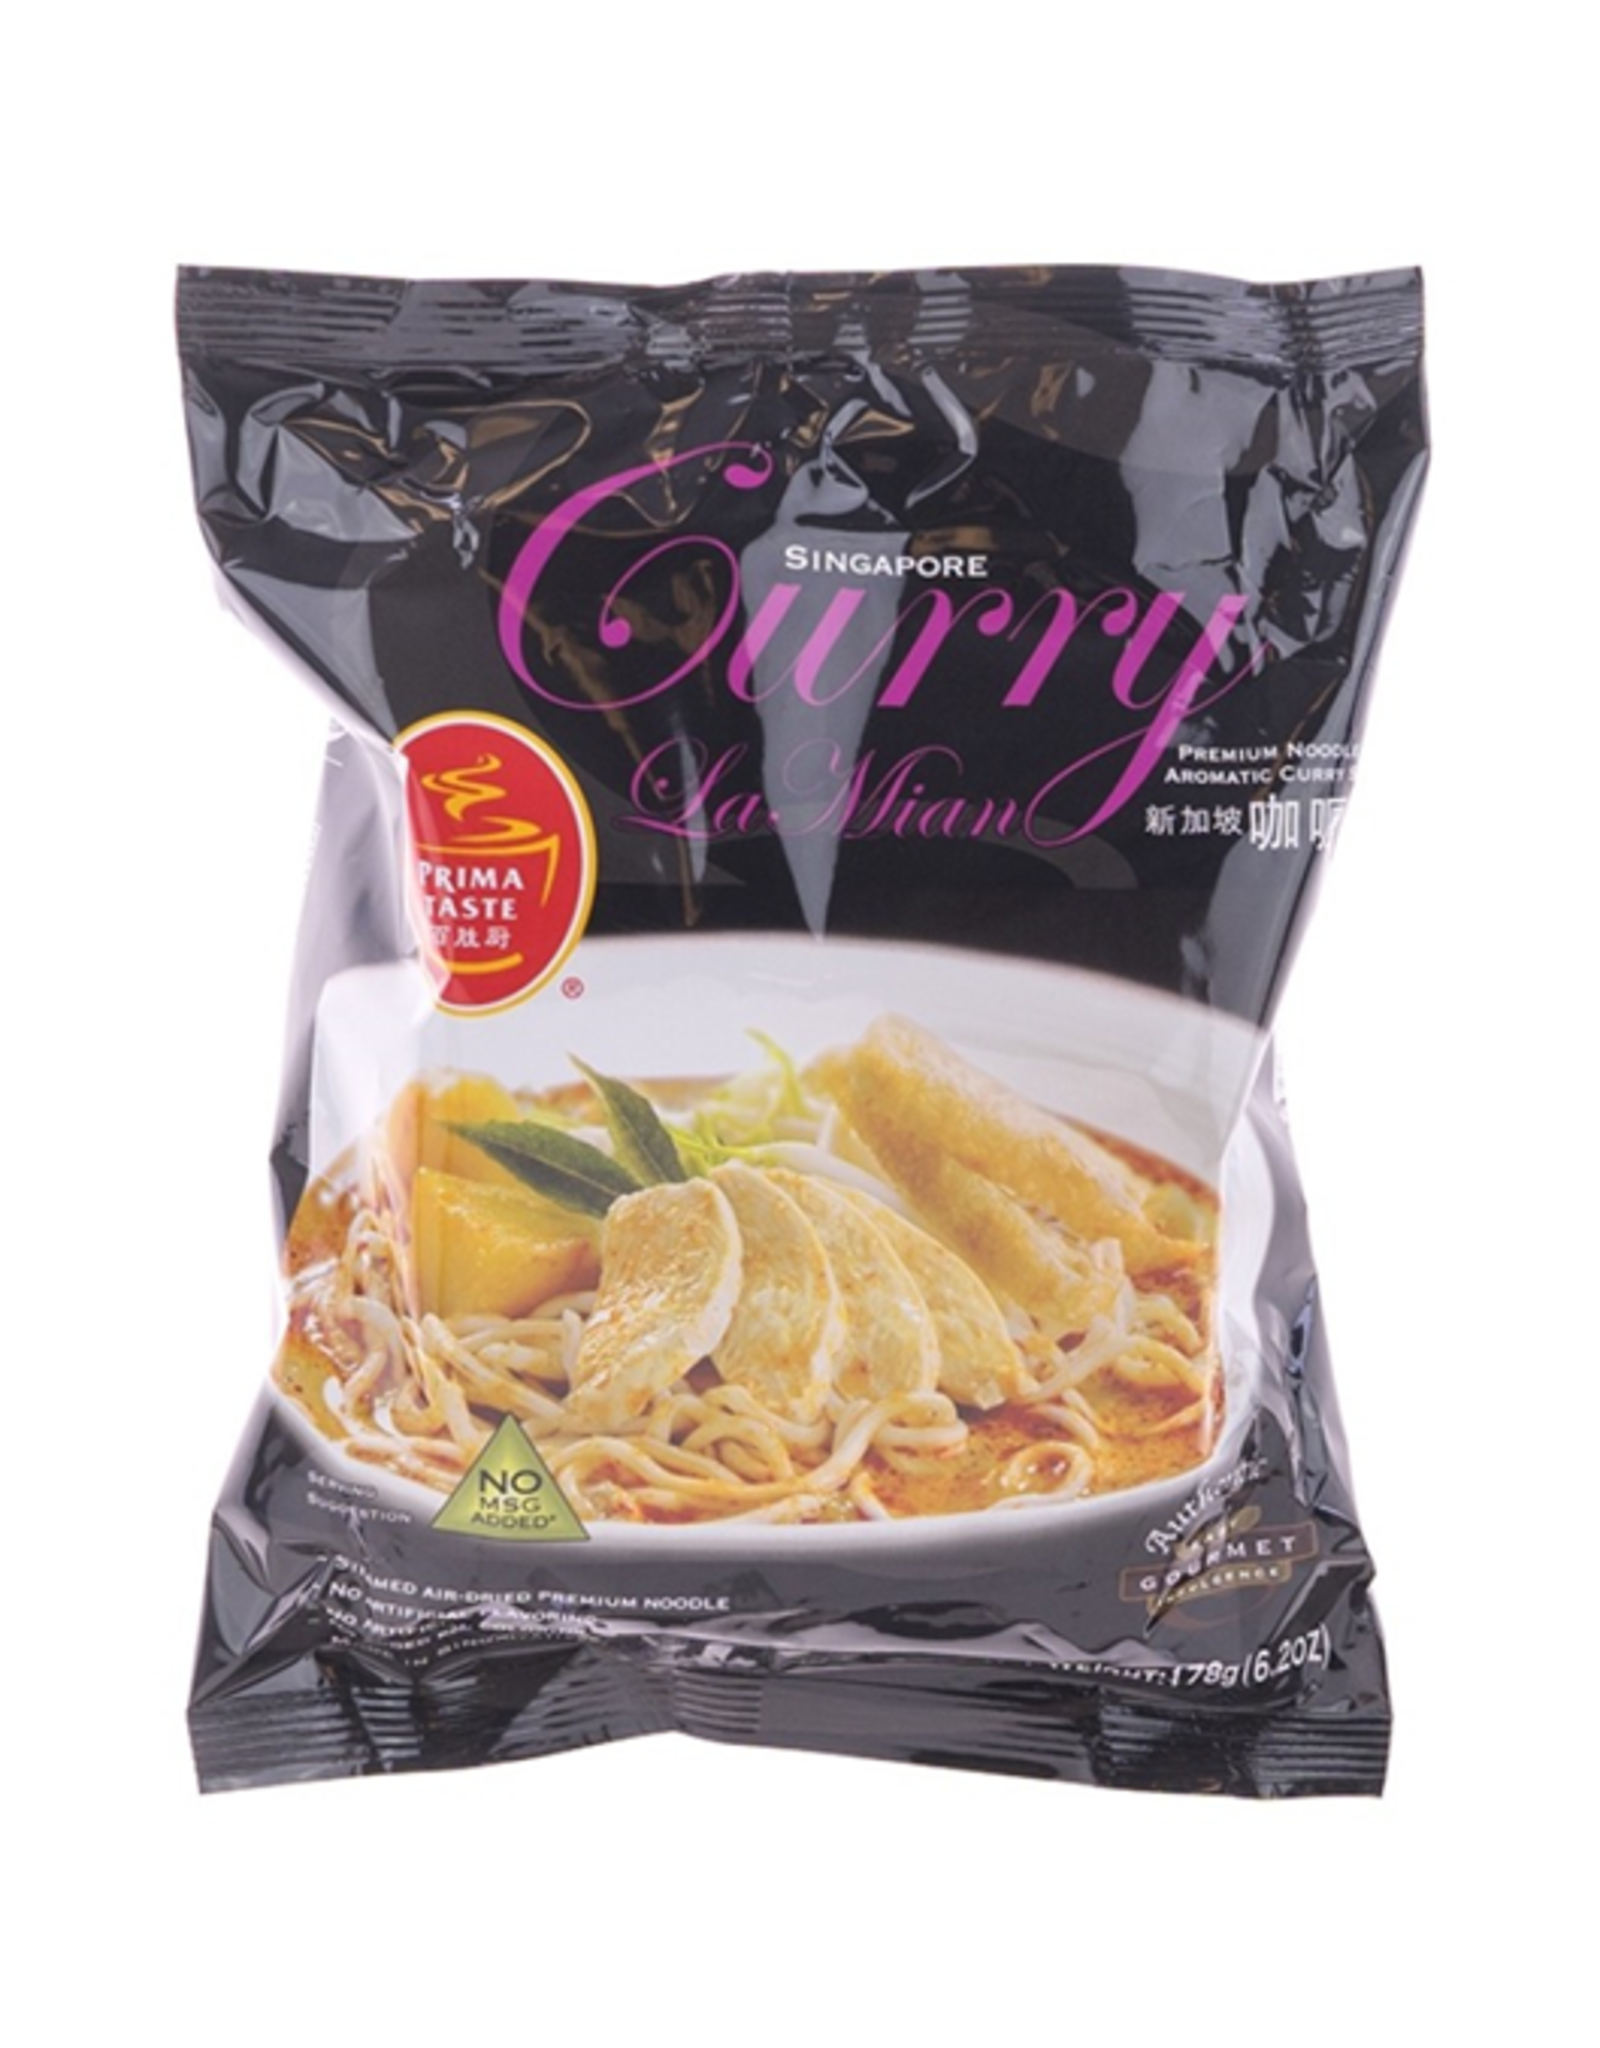 Prima Taste Singapore Curry La Mian